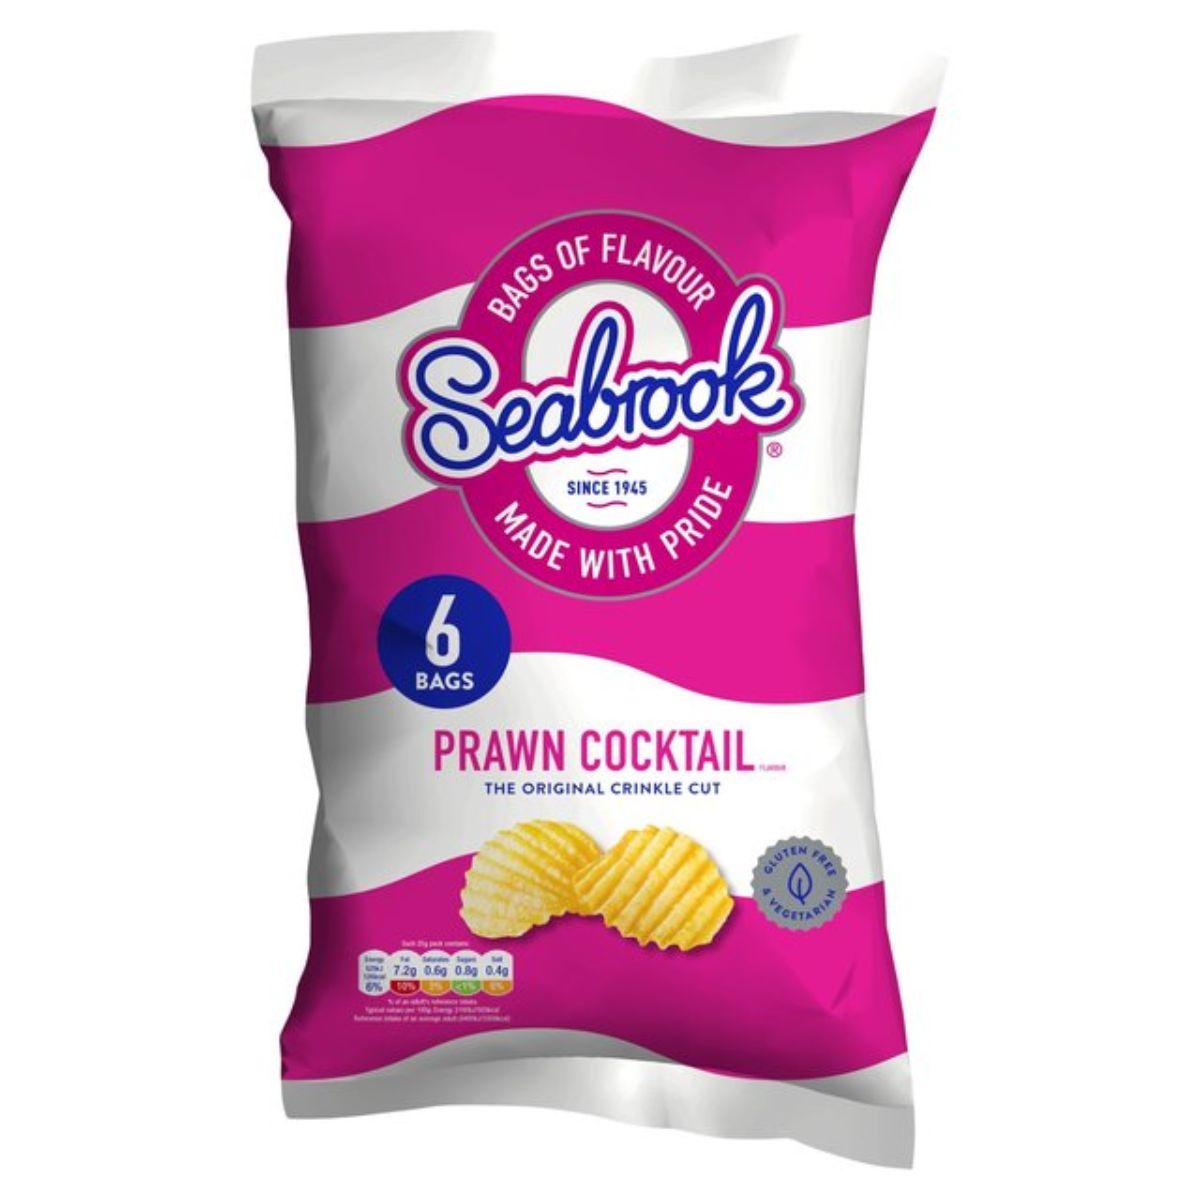 Seabrook - Prawn Cocktail - 6x25g prawn cocktail chips.